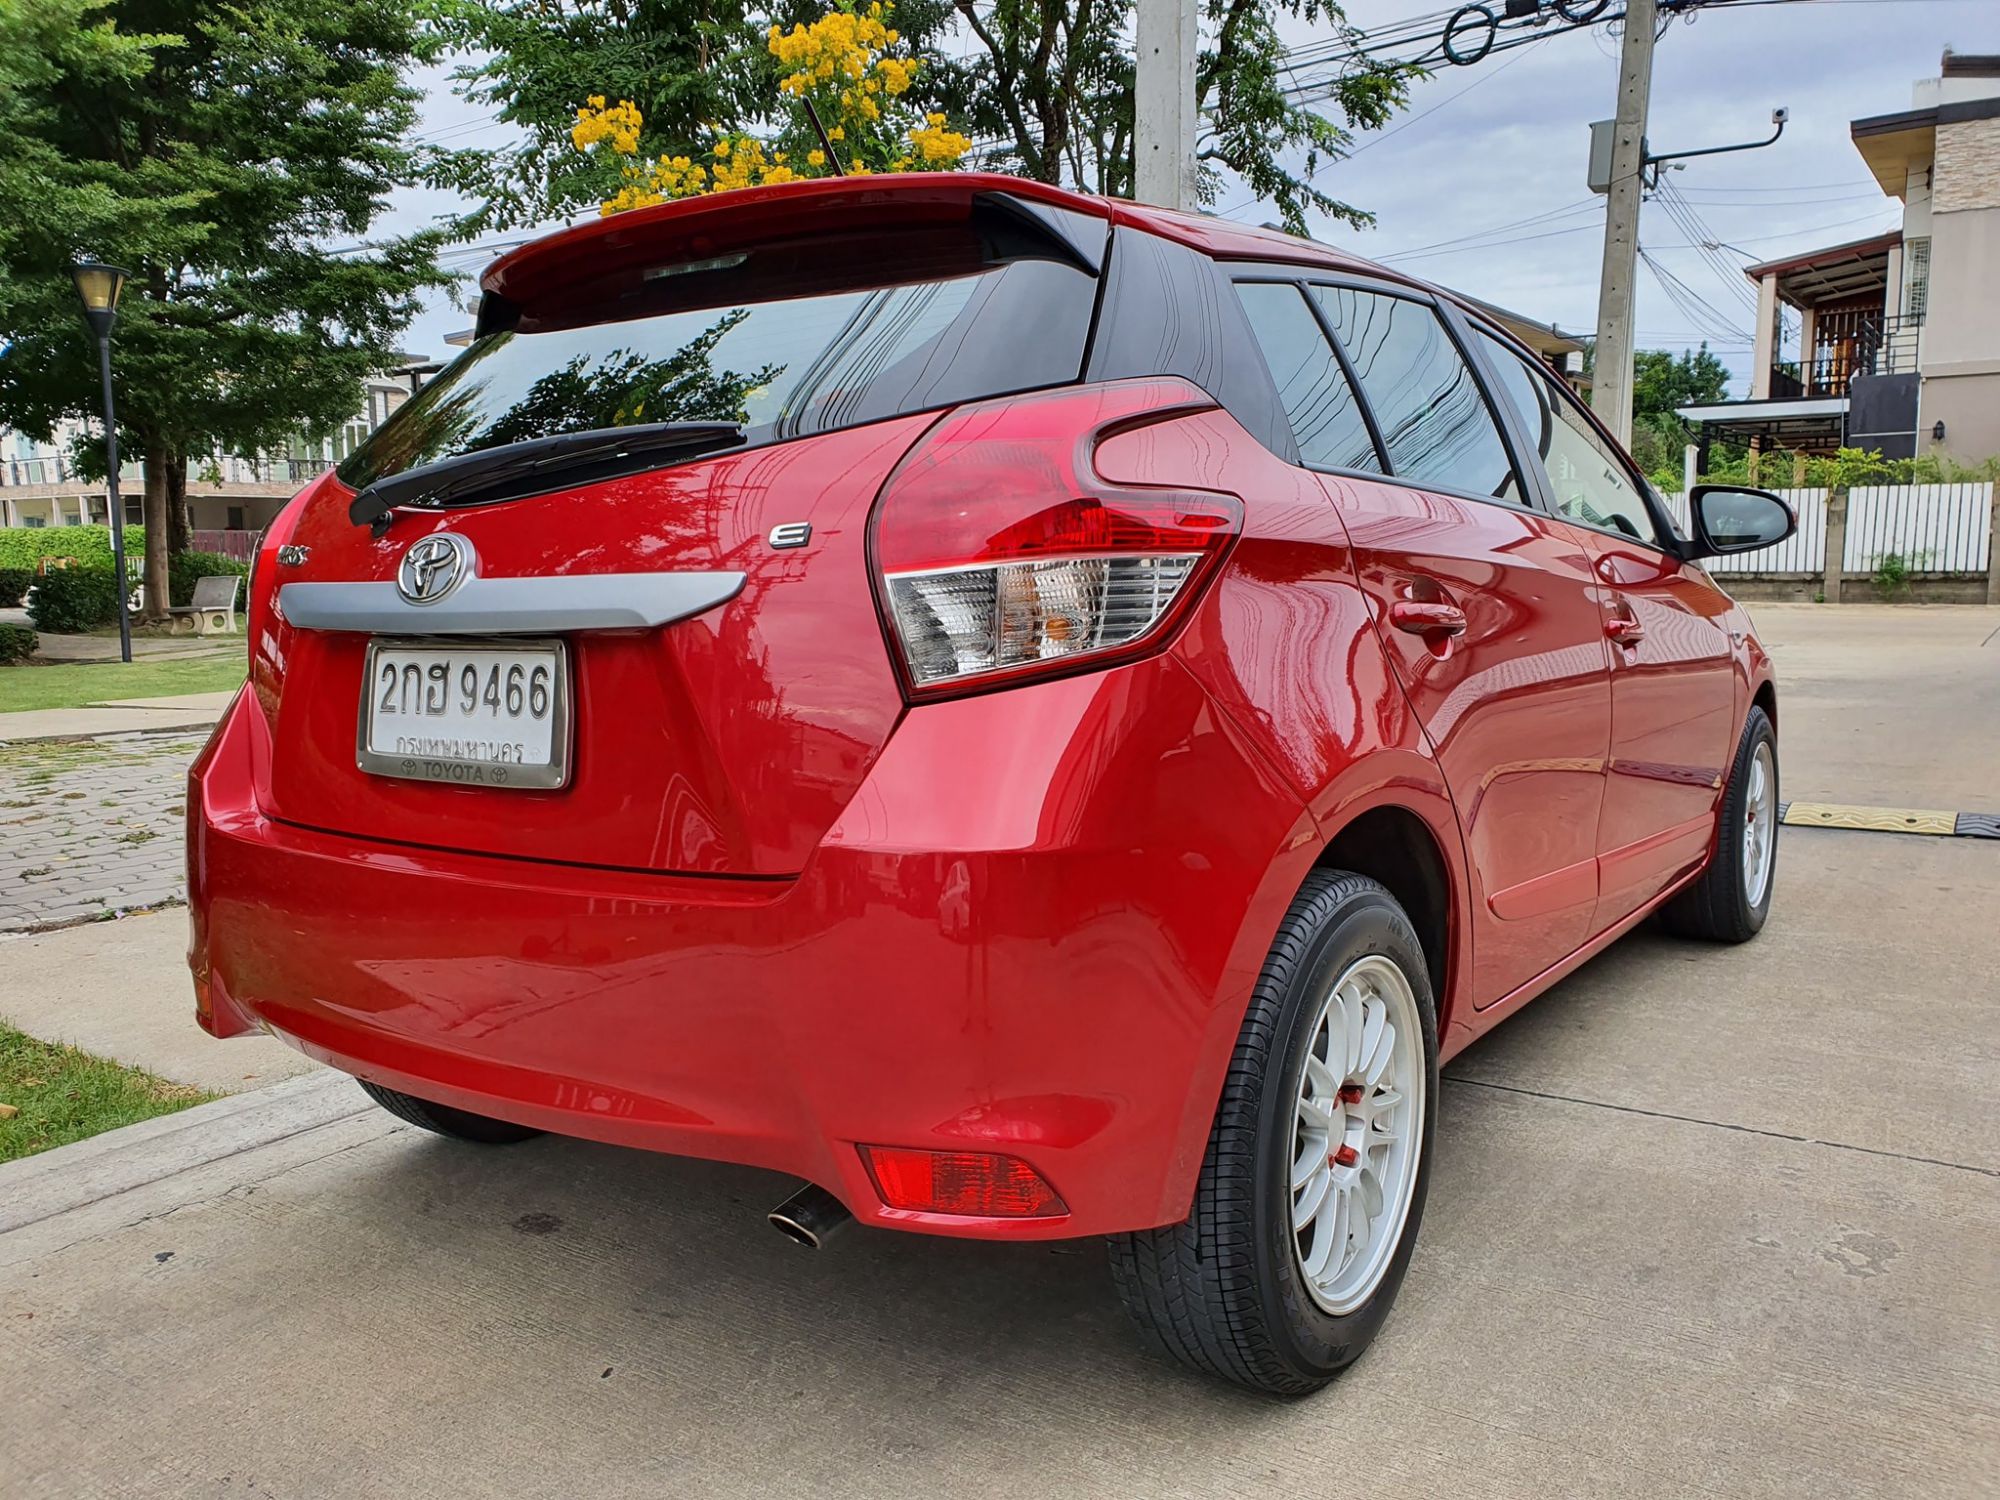 Toyota Yaris ปี 2014 สีแดง